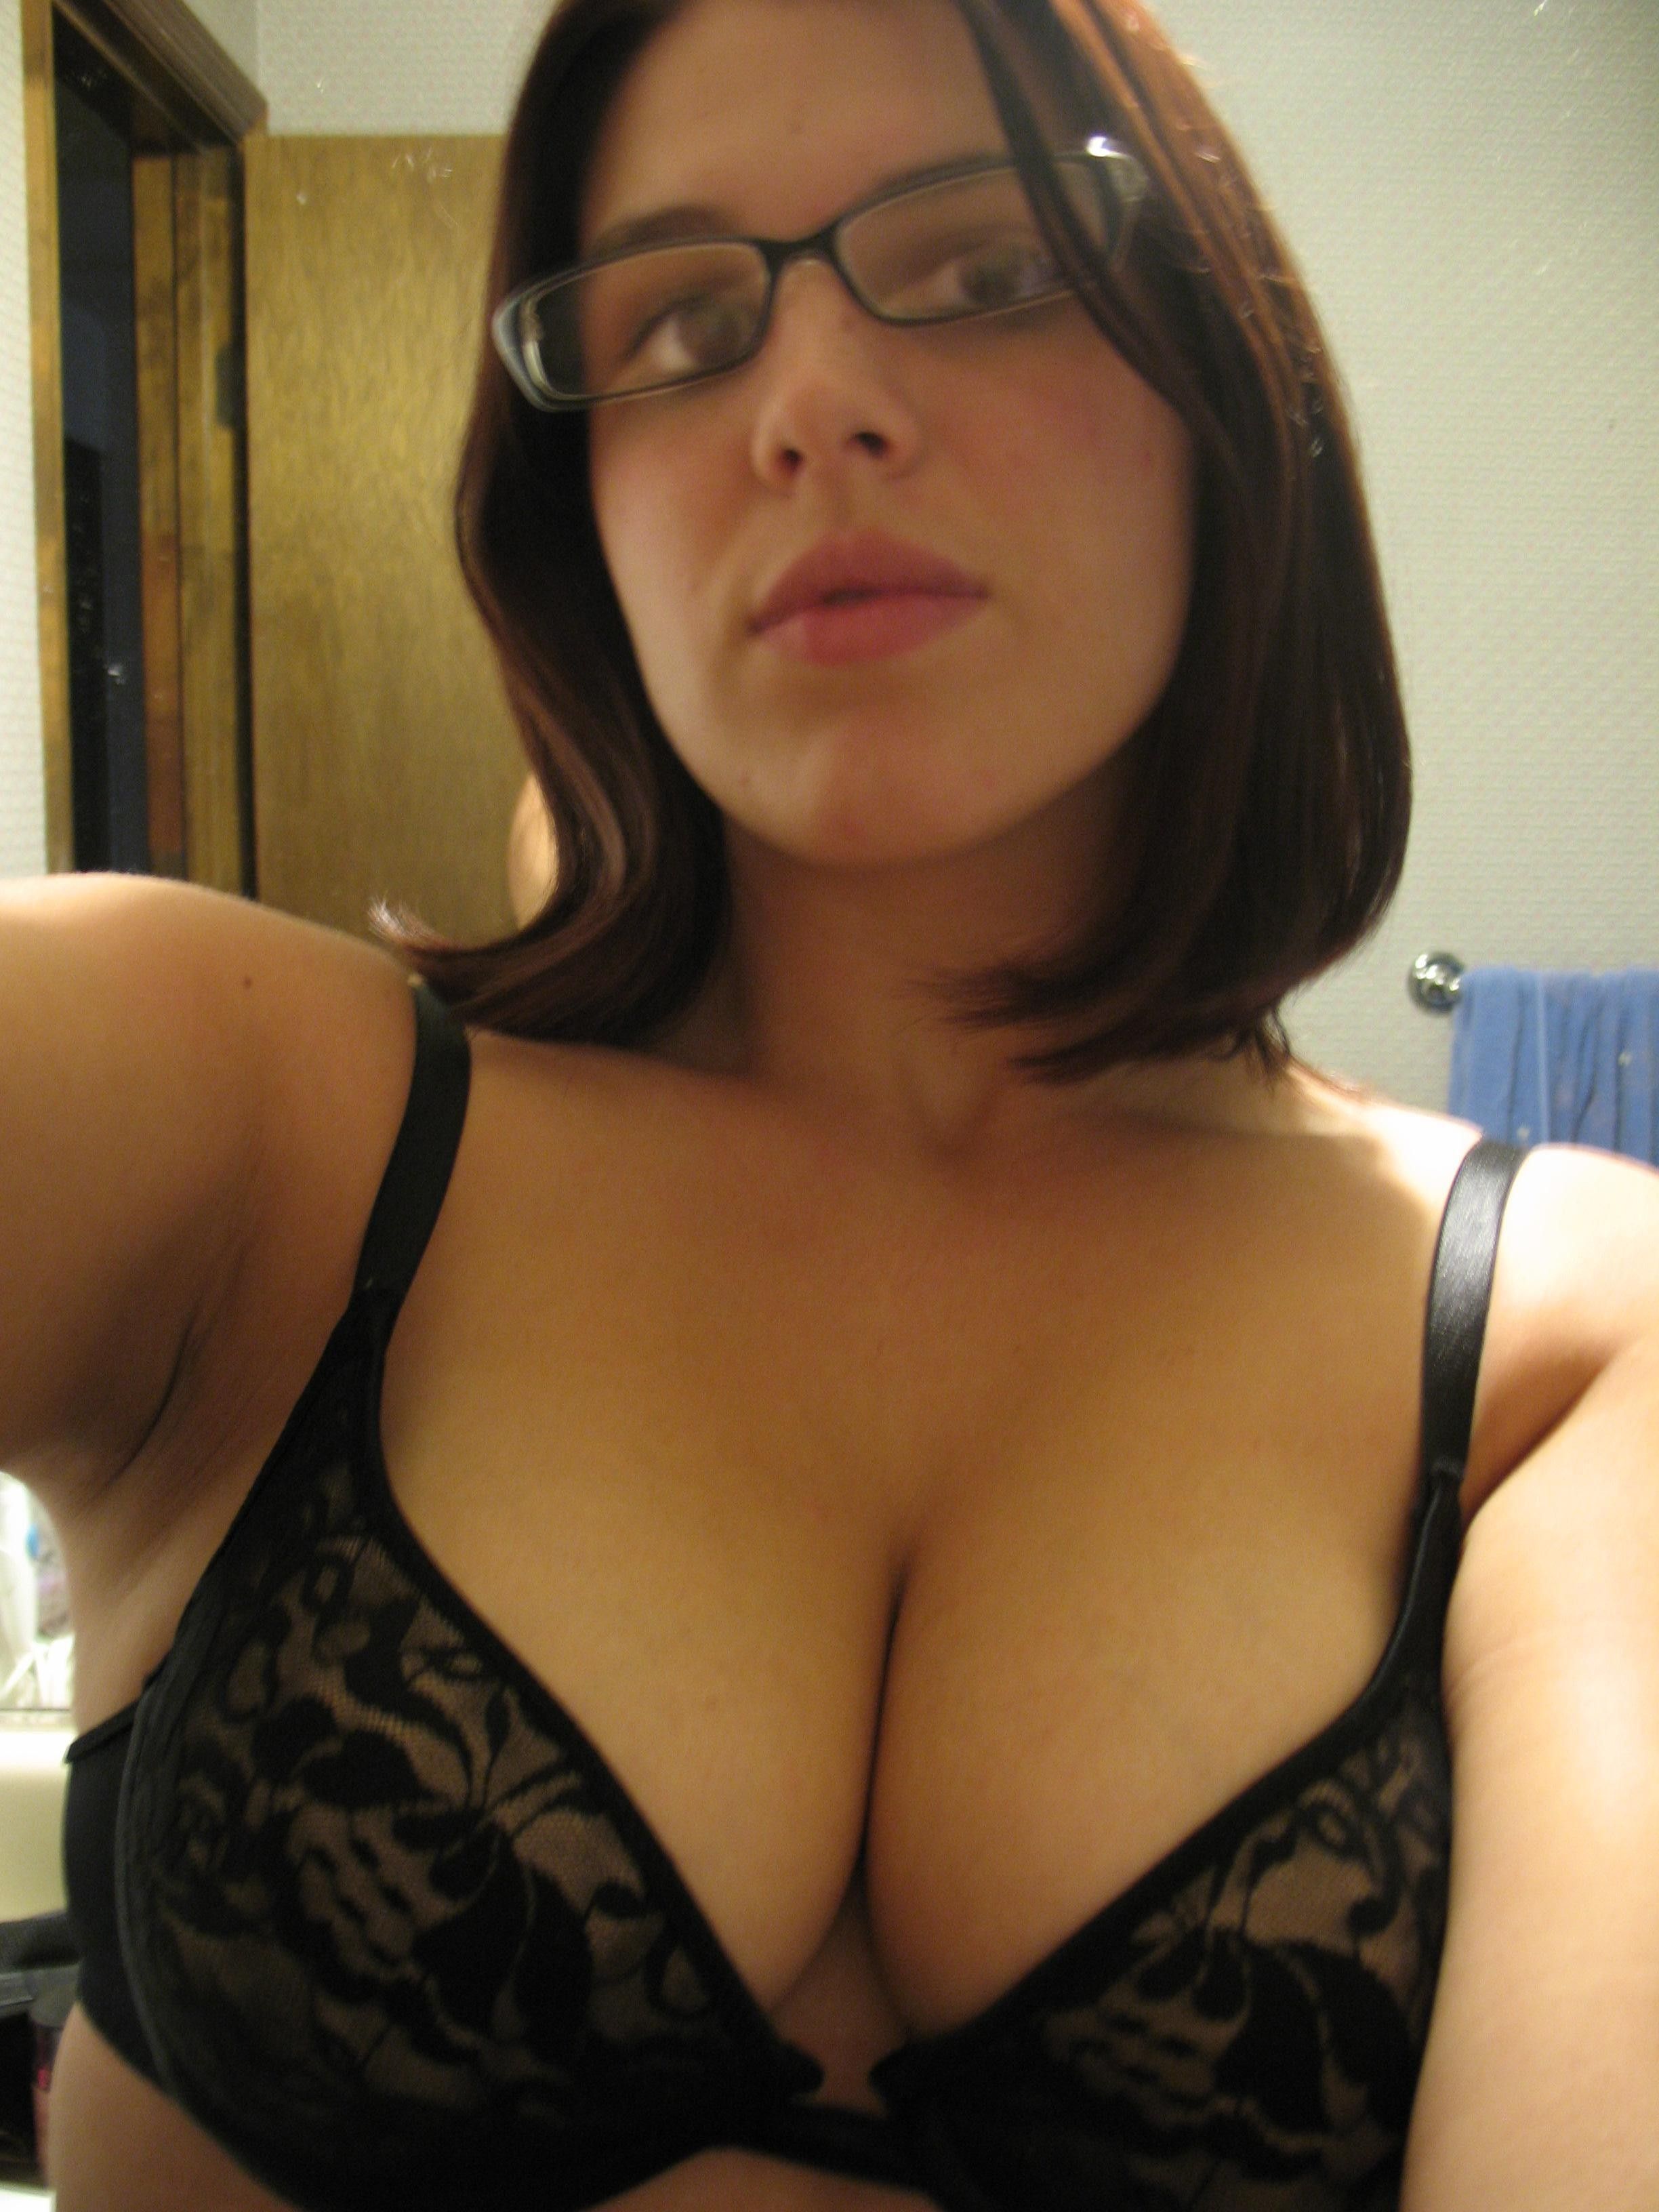 Brunette glasses lingerie NEW photos free site.